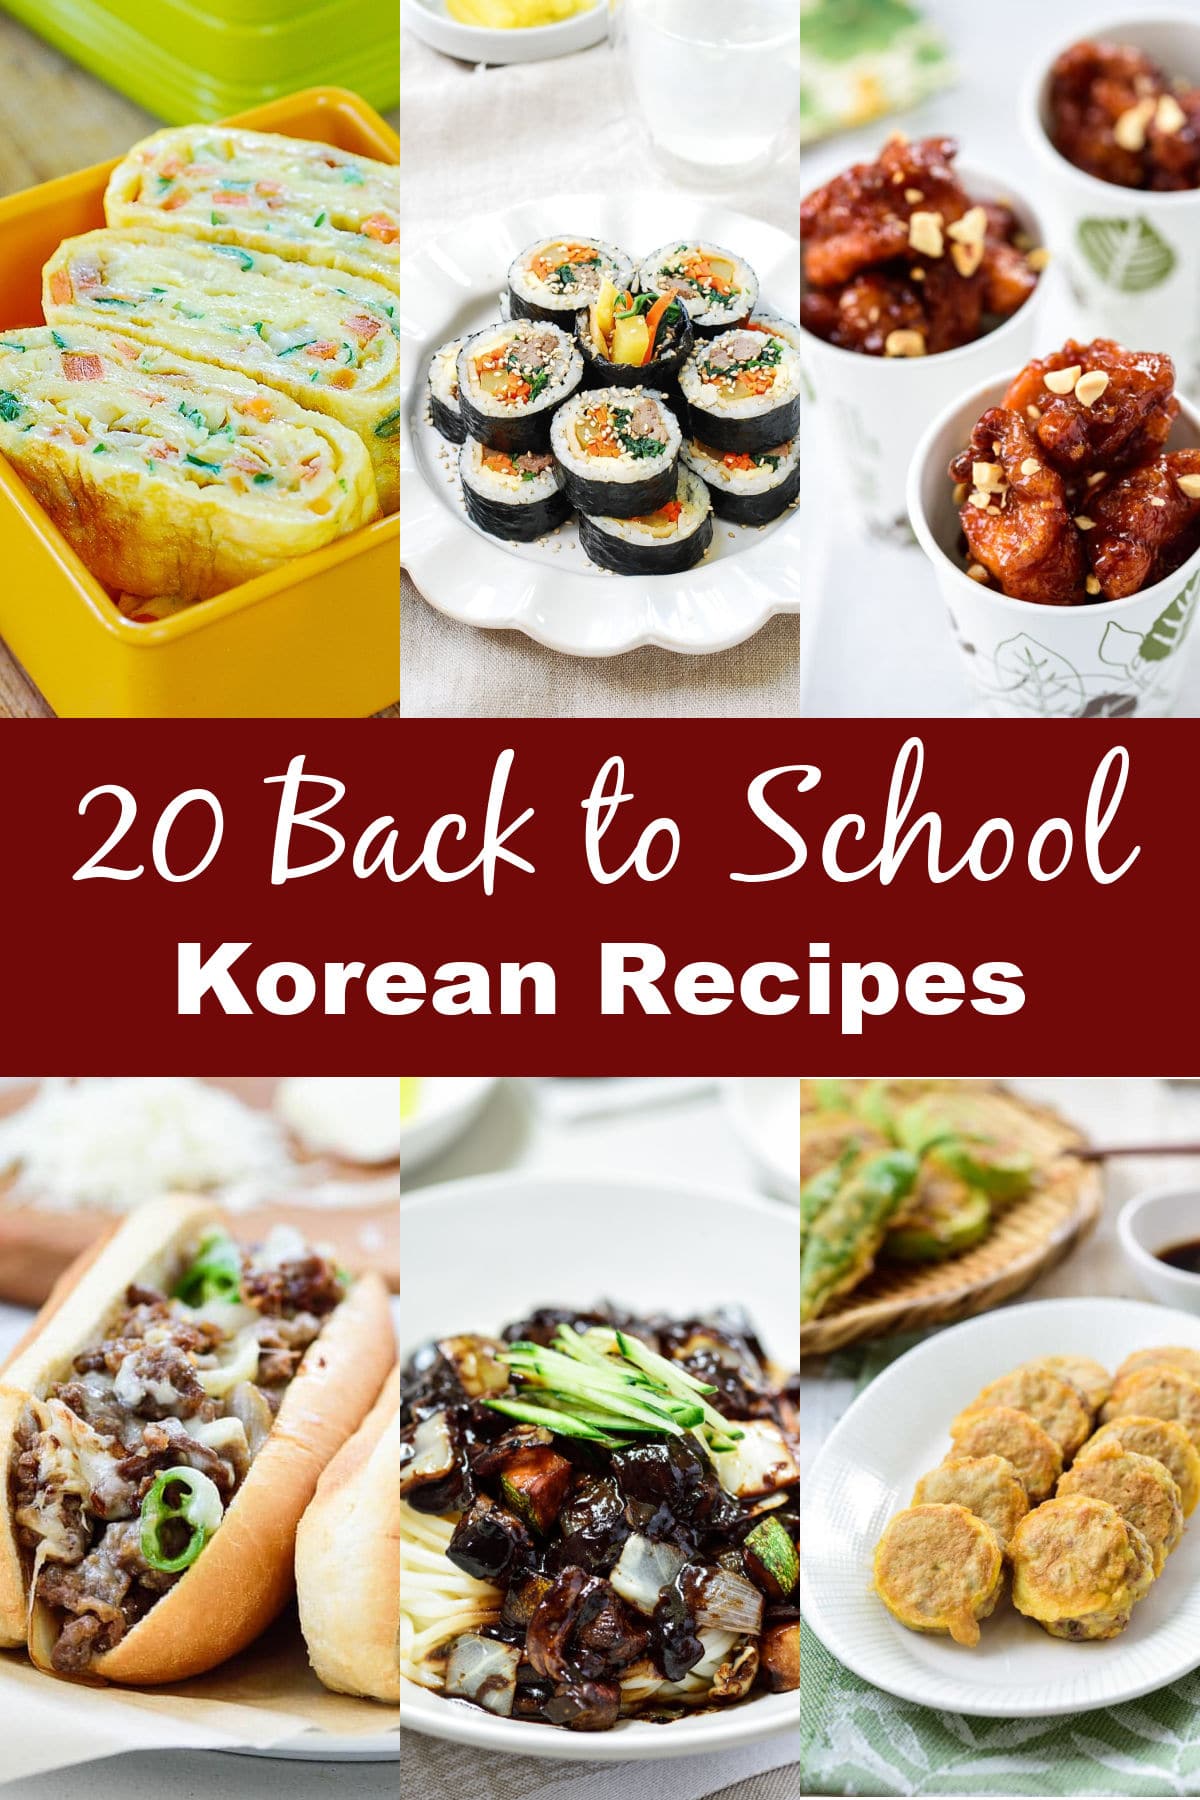 4 x 6 in 9 - 20 Back to School Korean Recipes